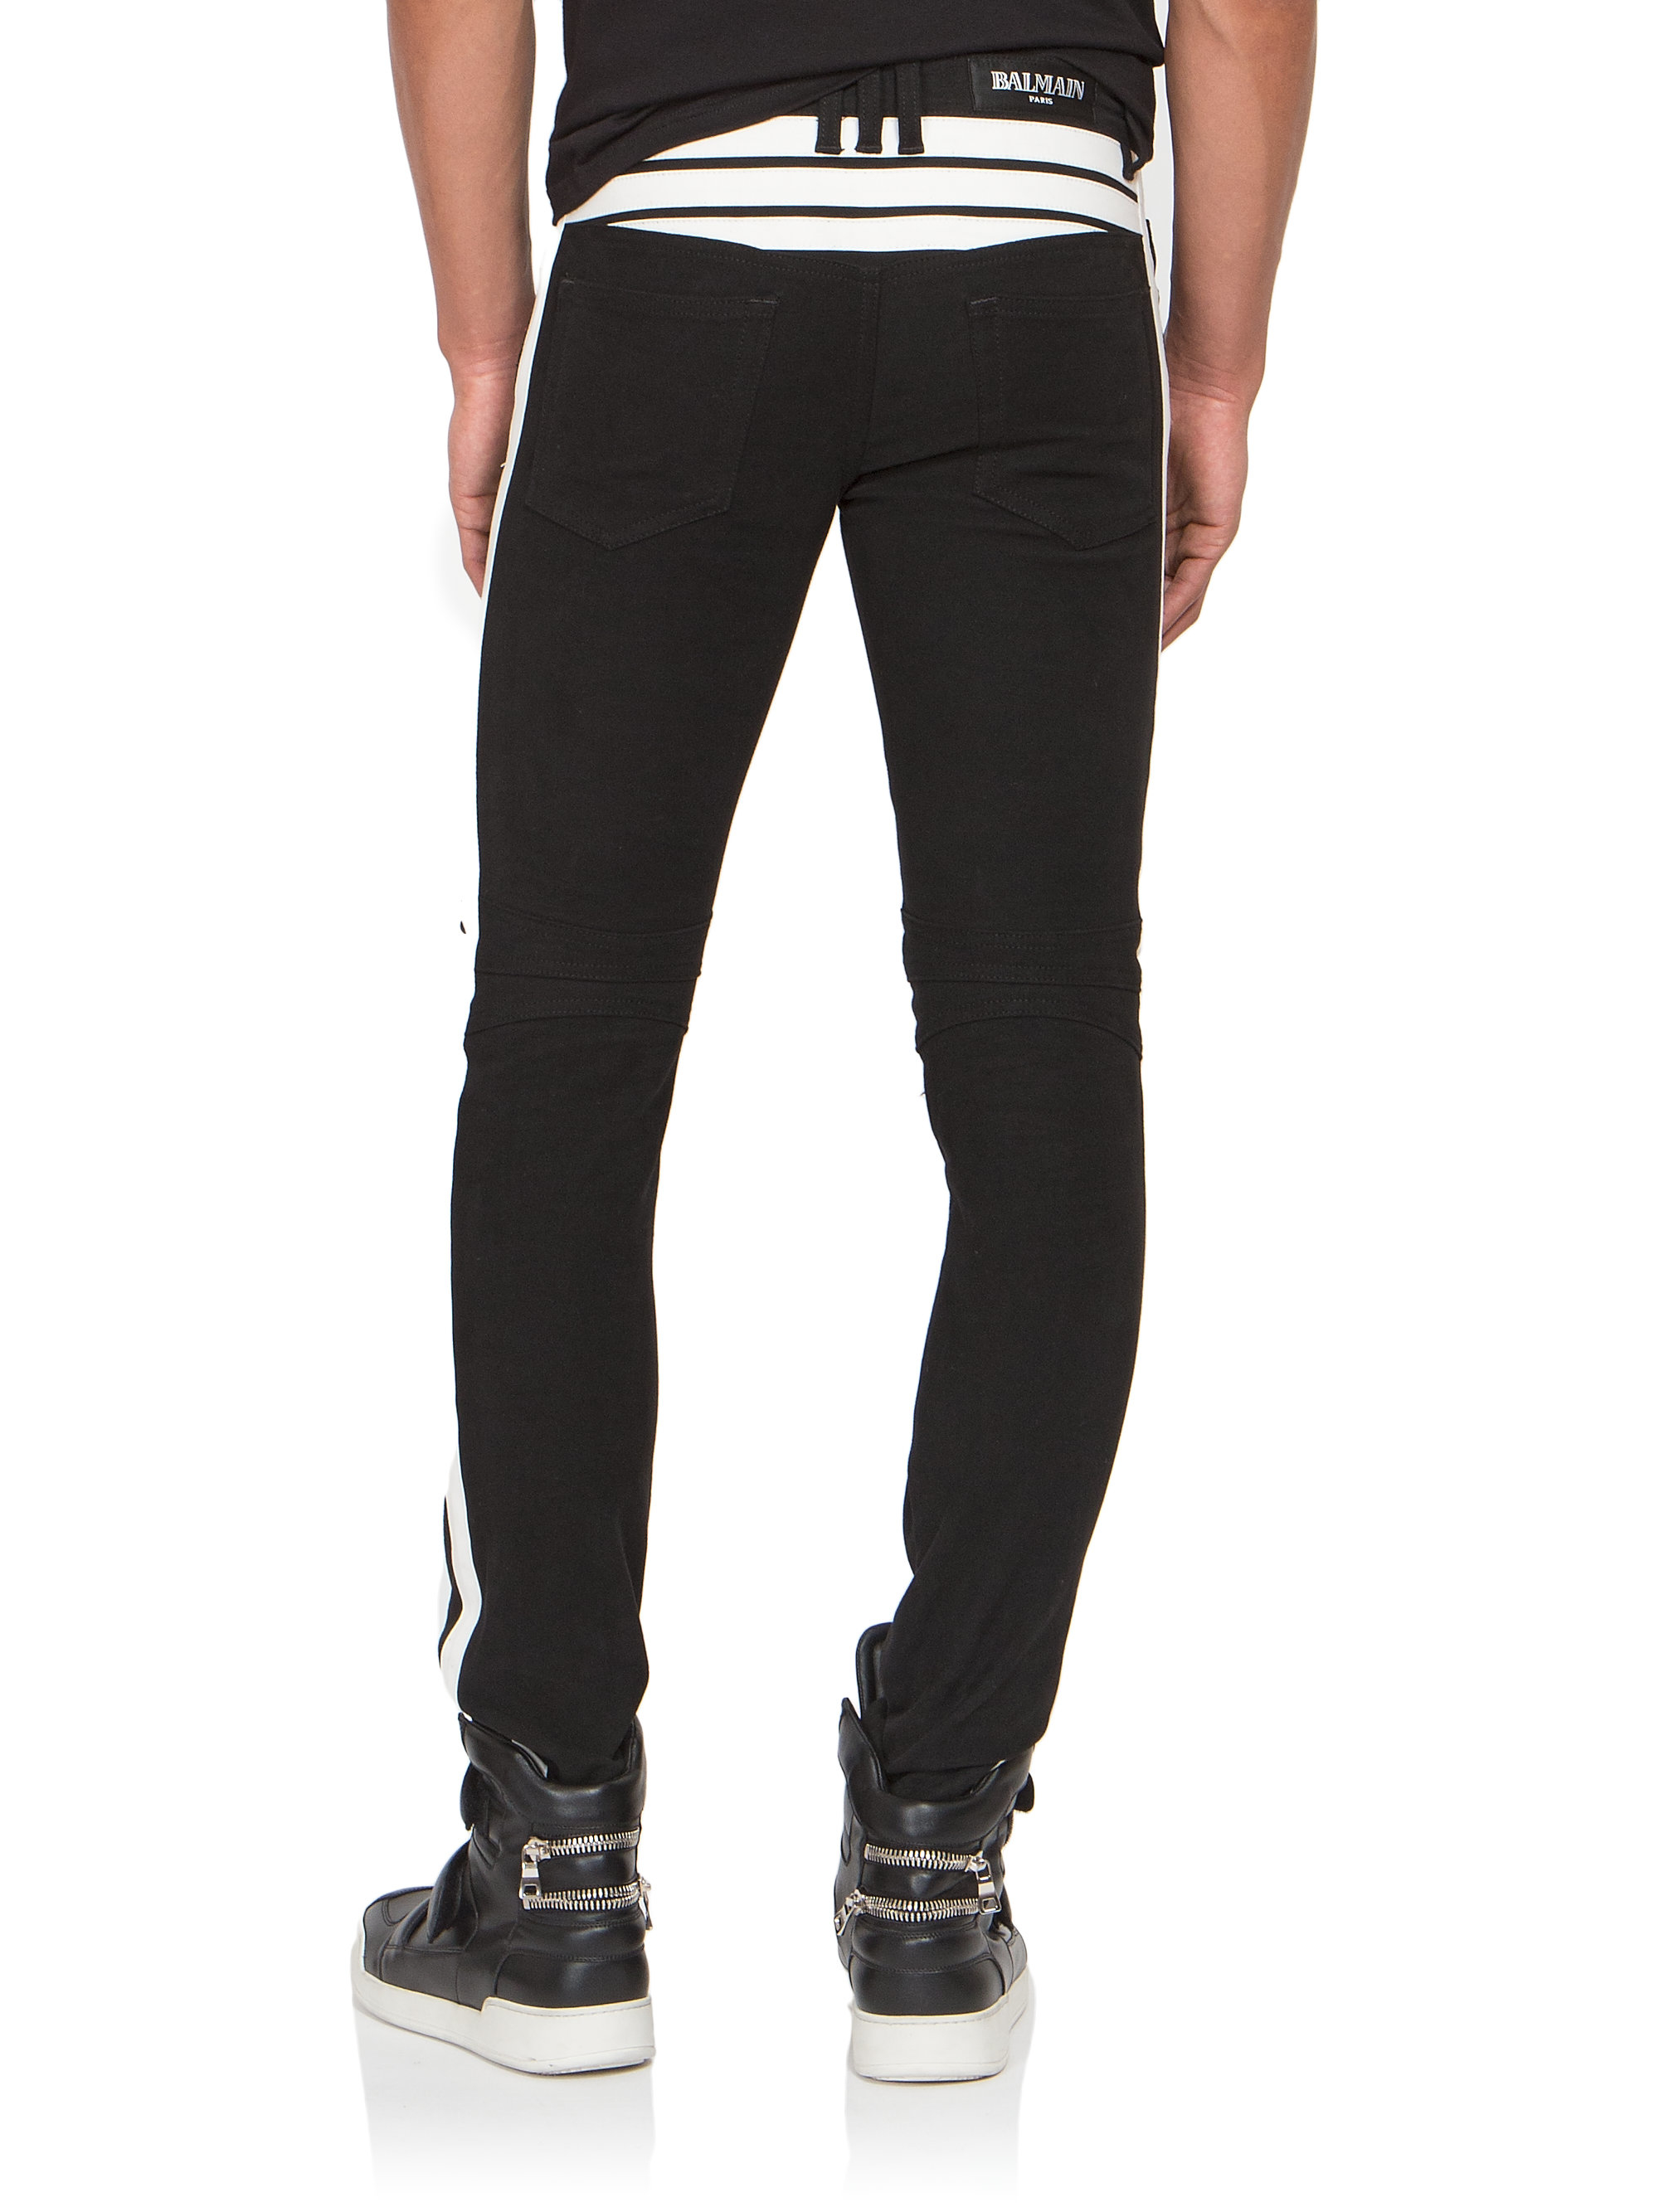 Lyst Balmain Racing Stripe Moto Slim Jeans in Black for Men